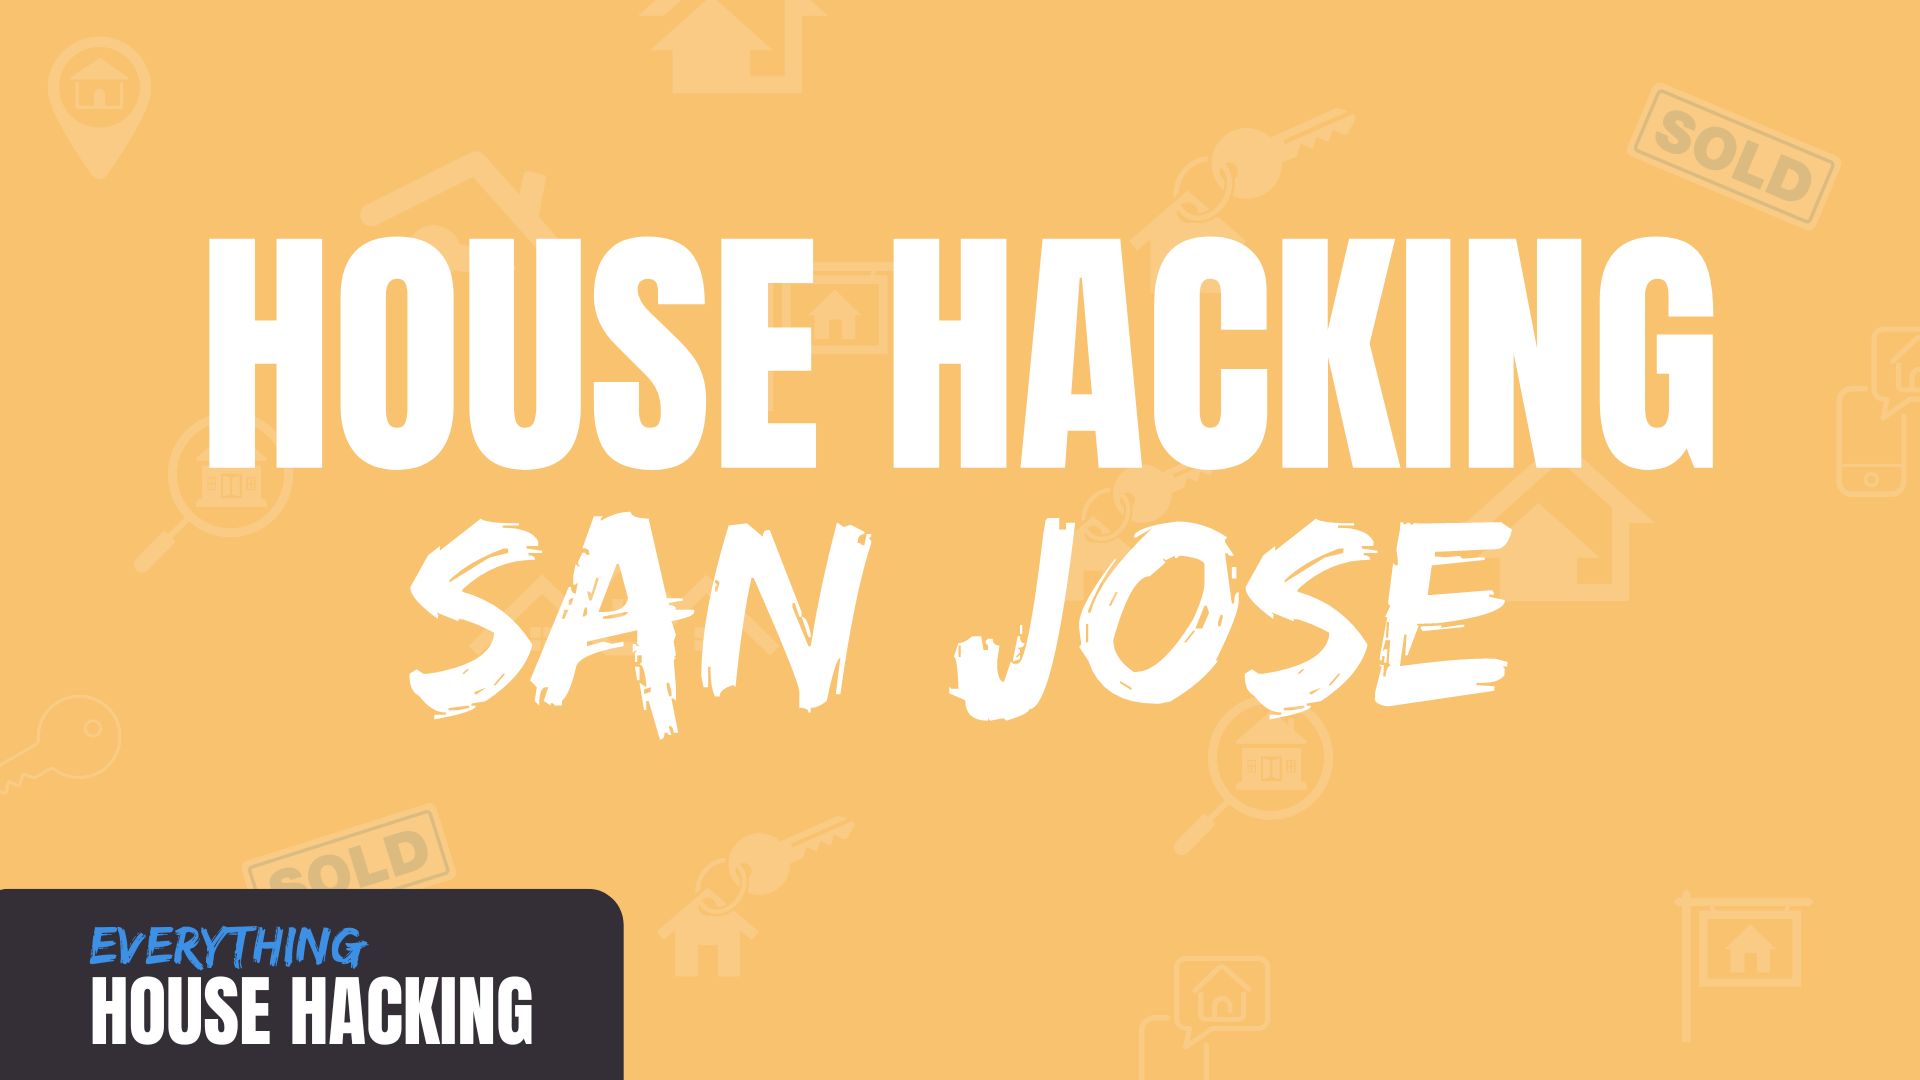 House hacking in san jose, california